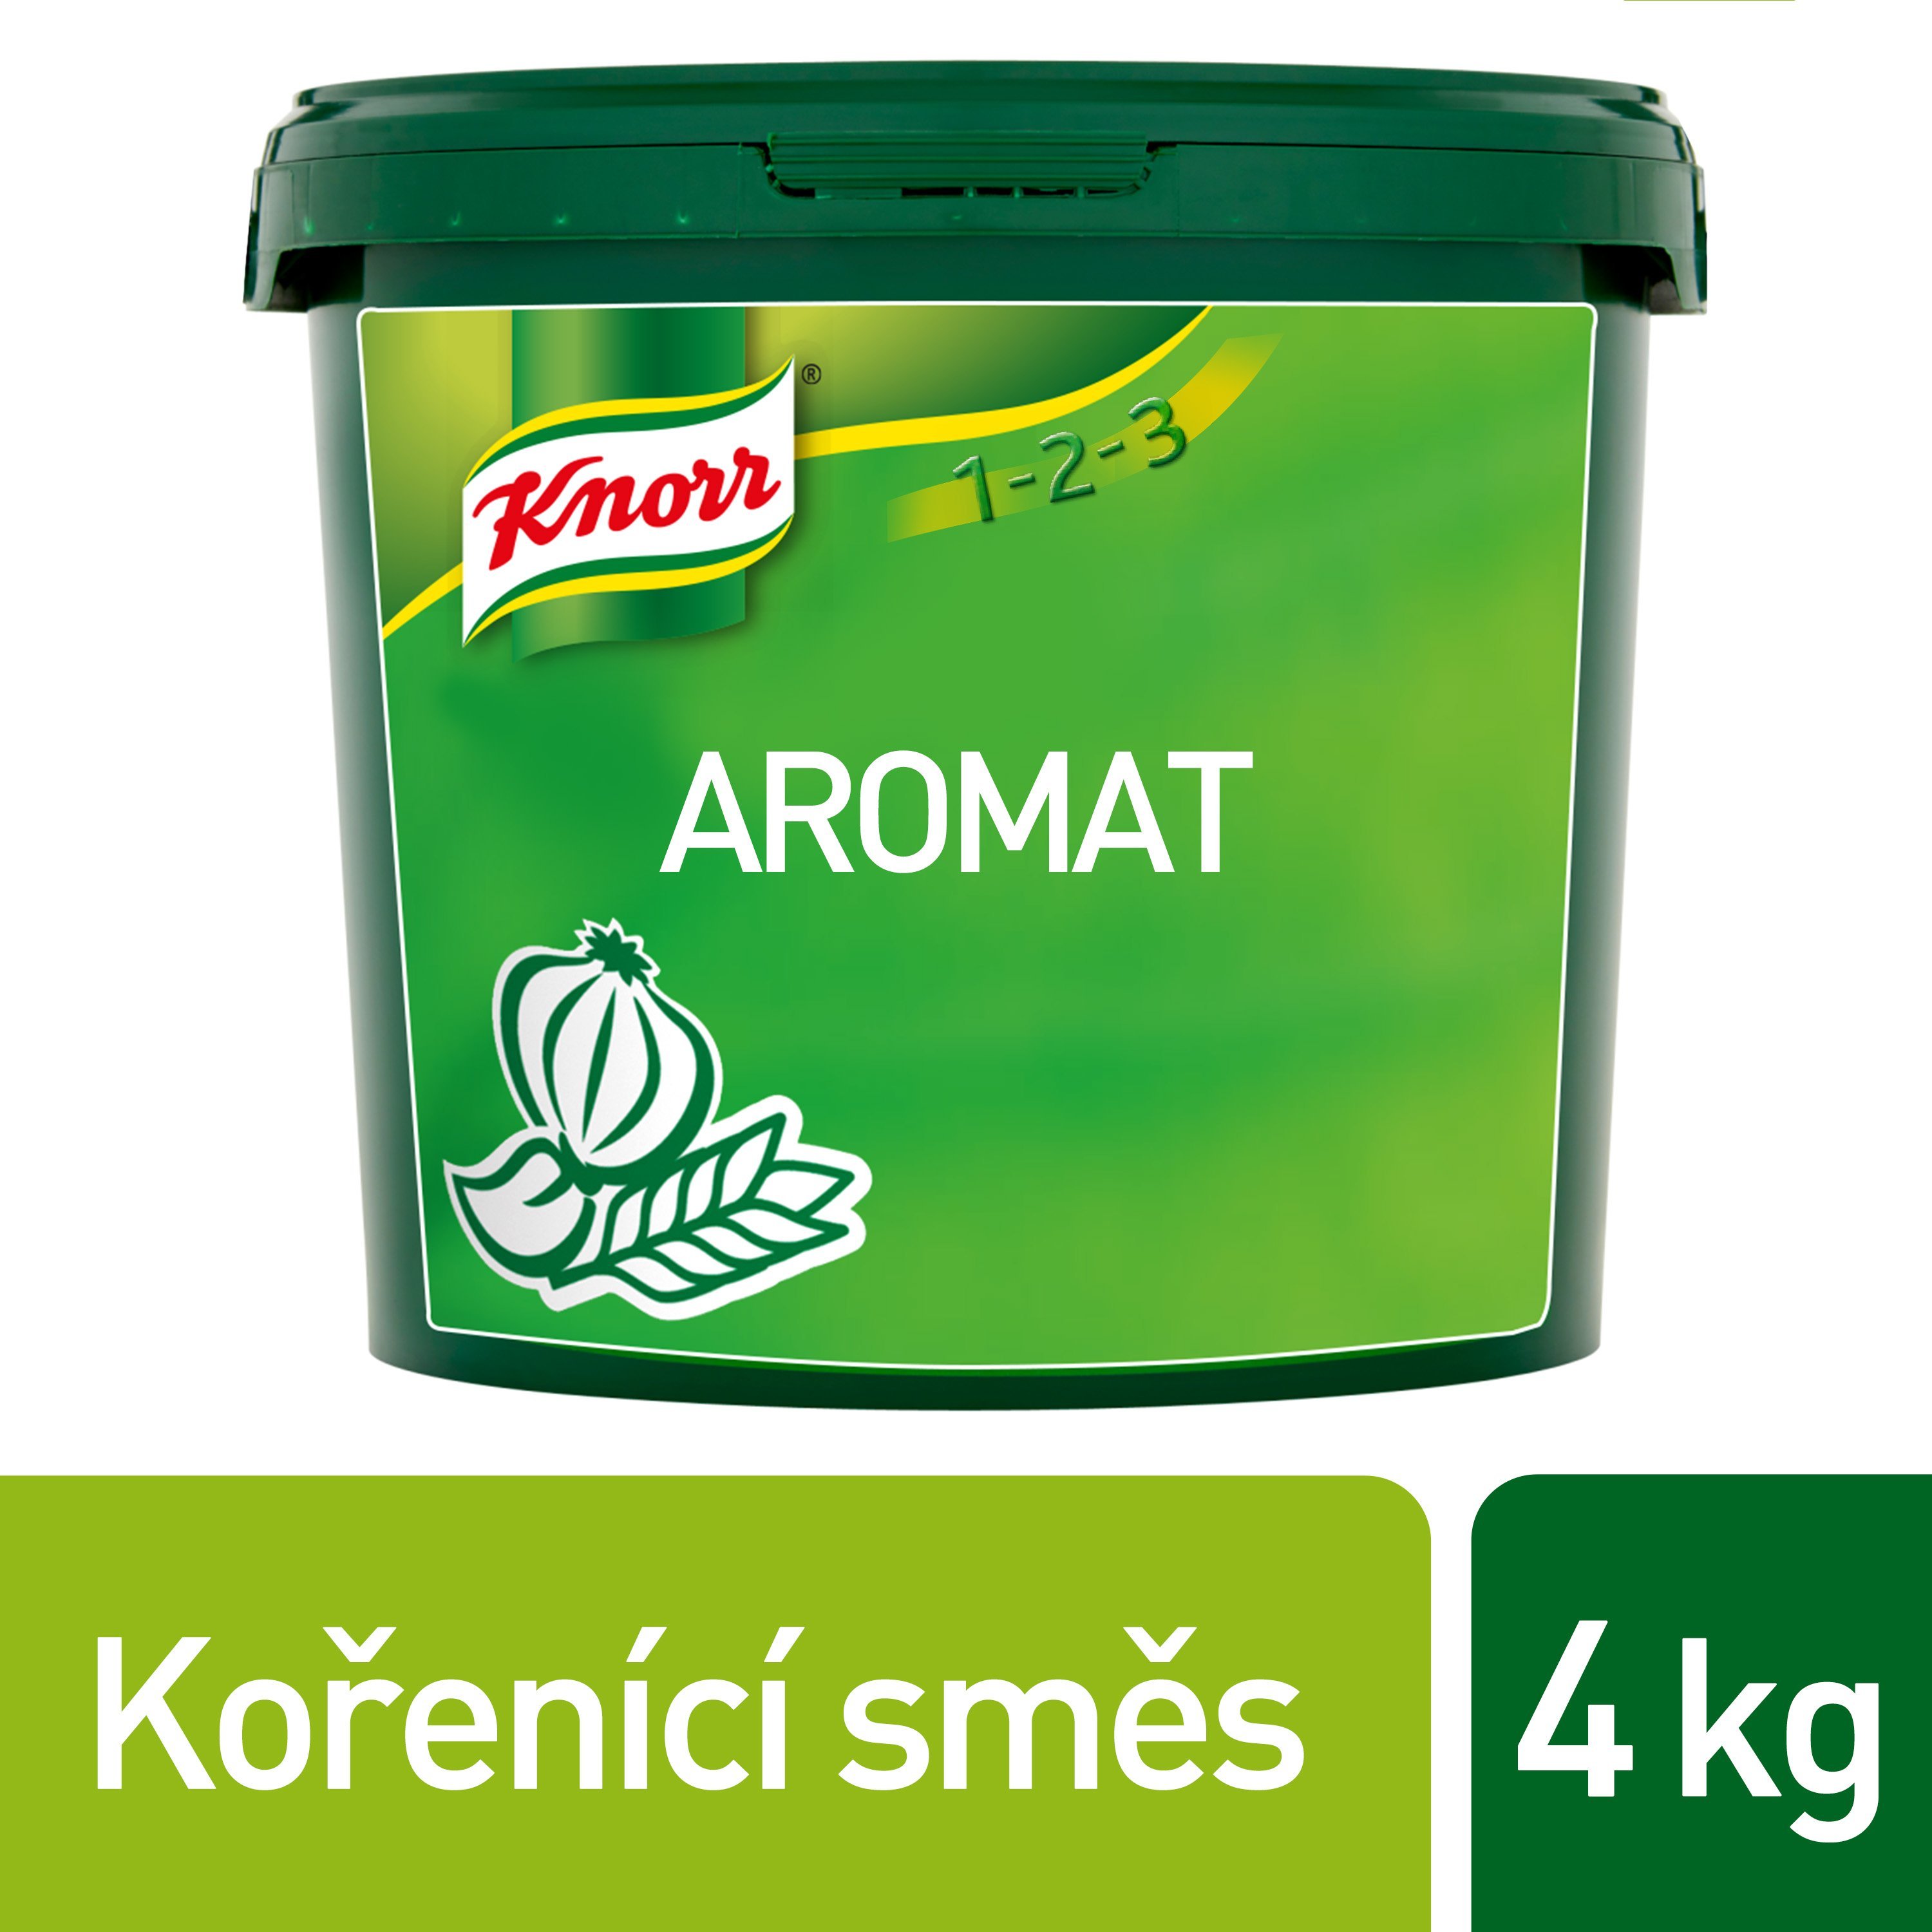 Knorr Aromat 4 kg - 